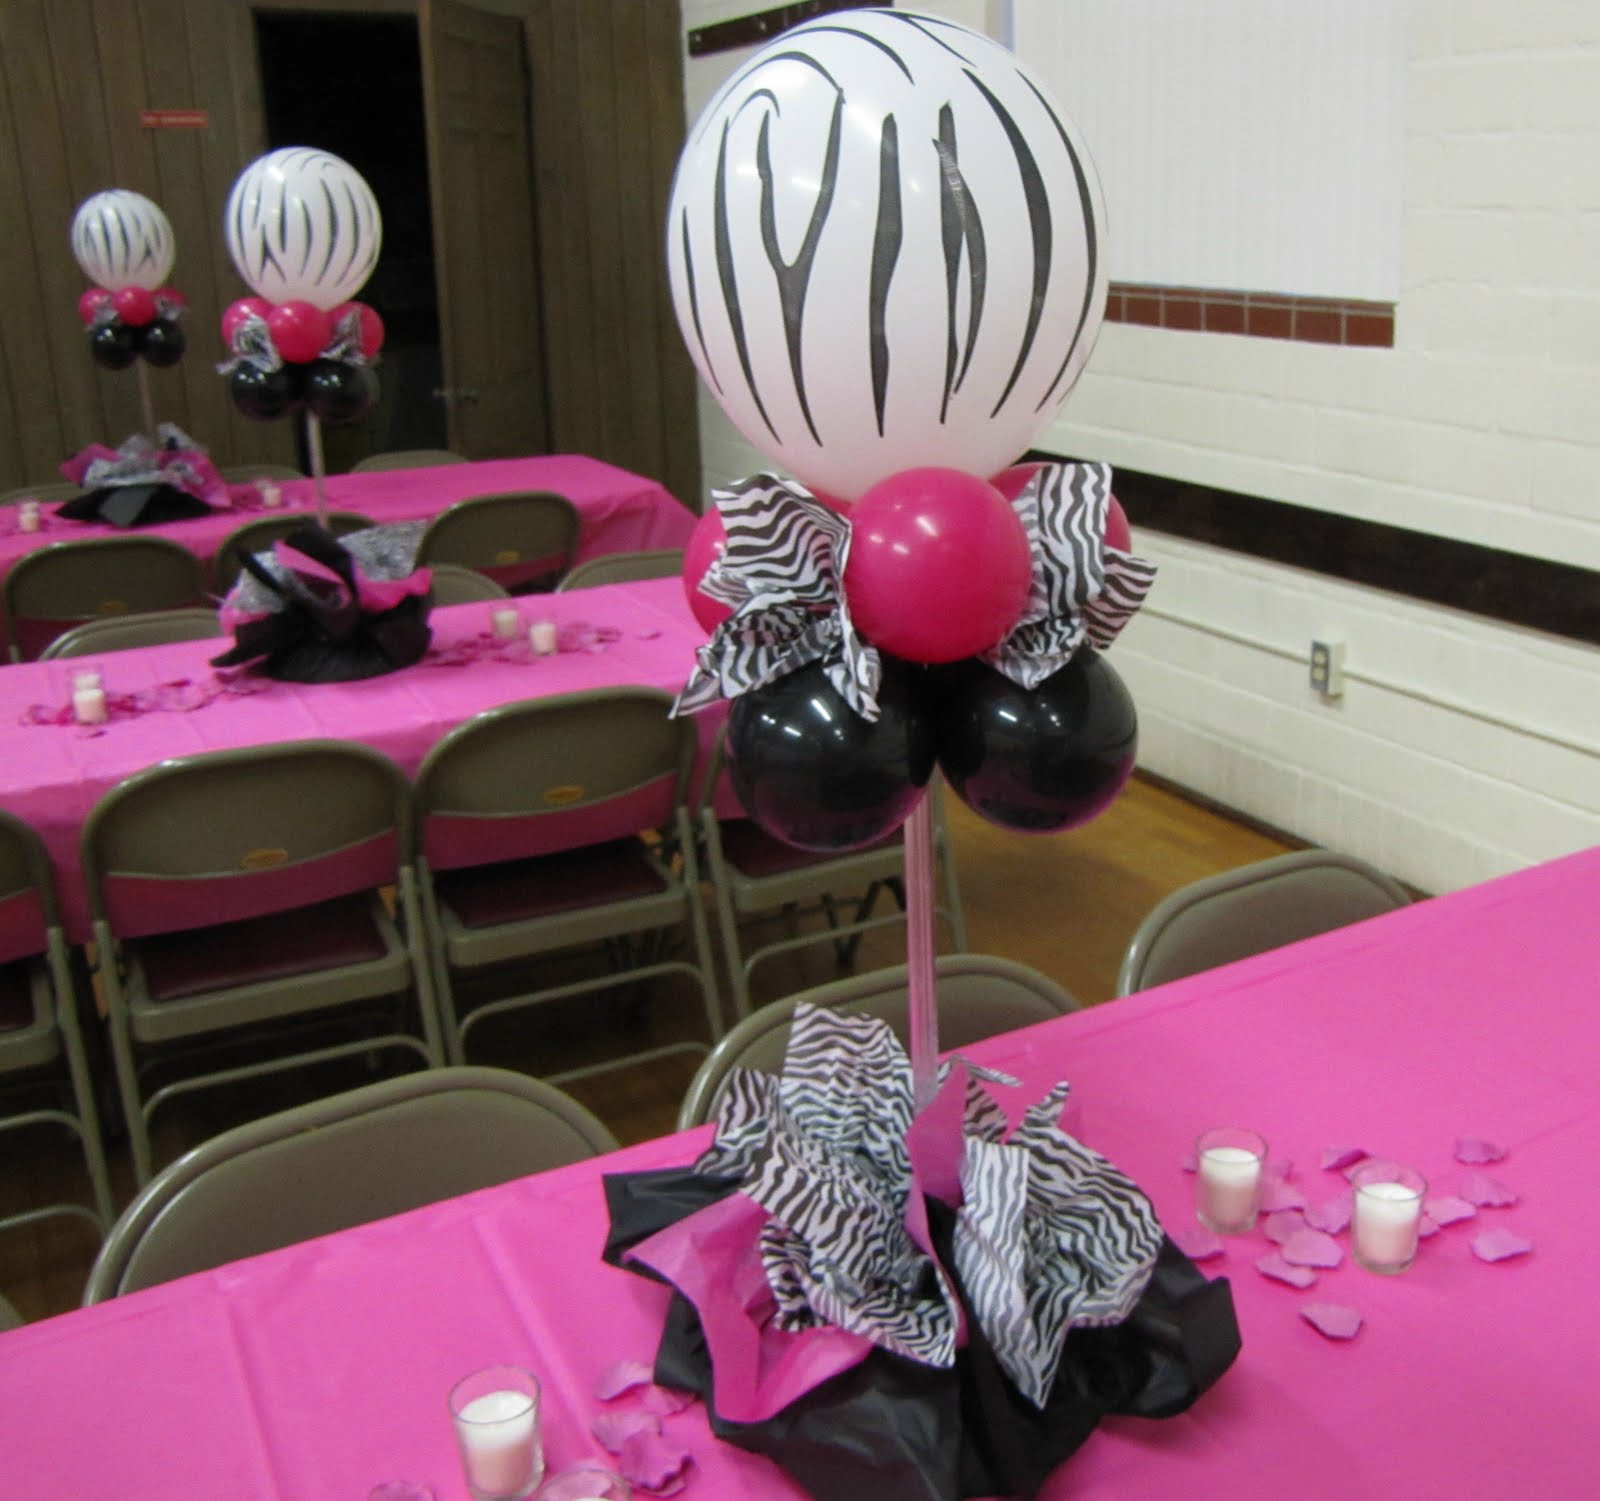 Zebra Print And Pink Birthday Party Ideas
 Zebra Party Decorations